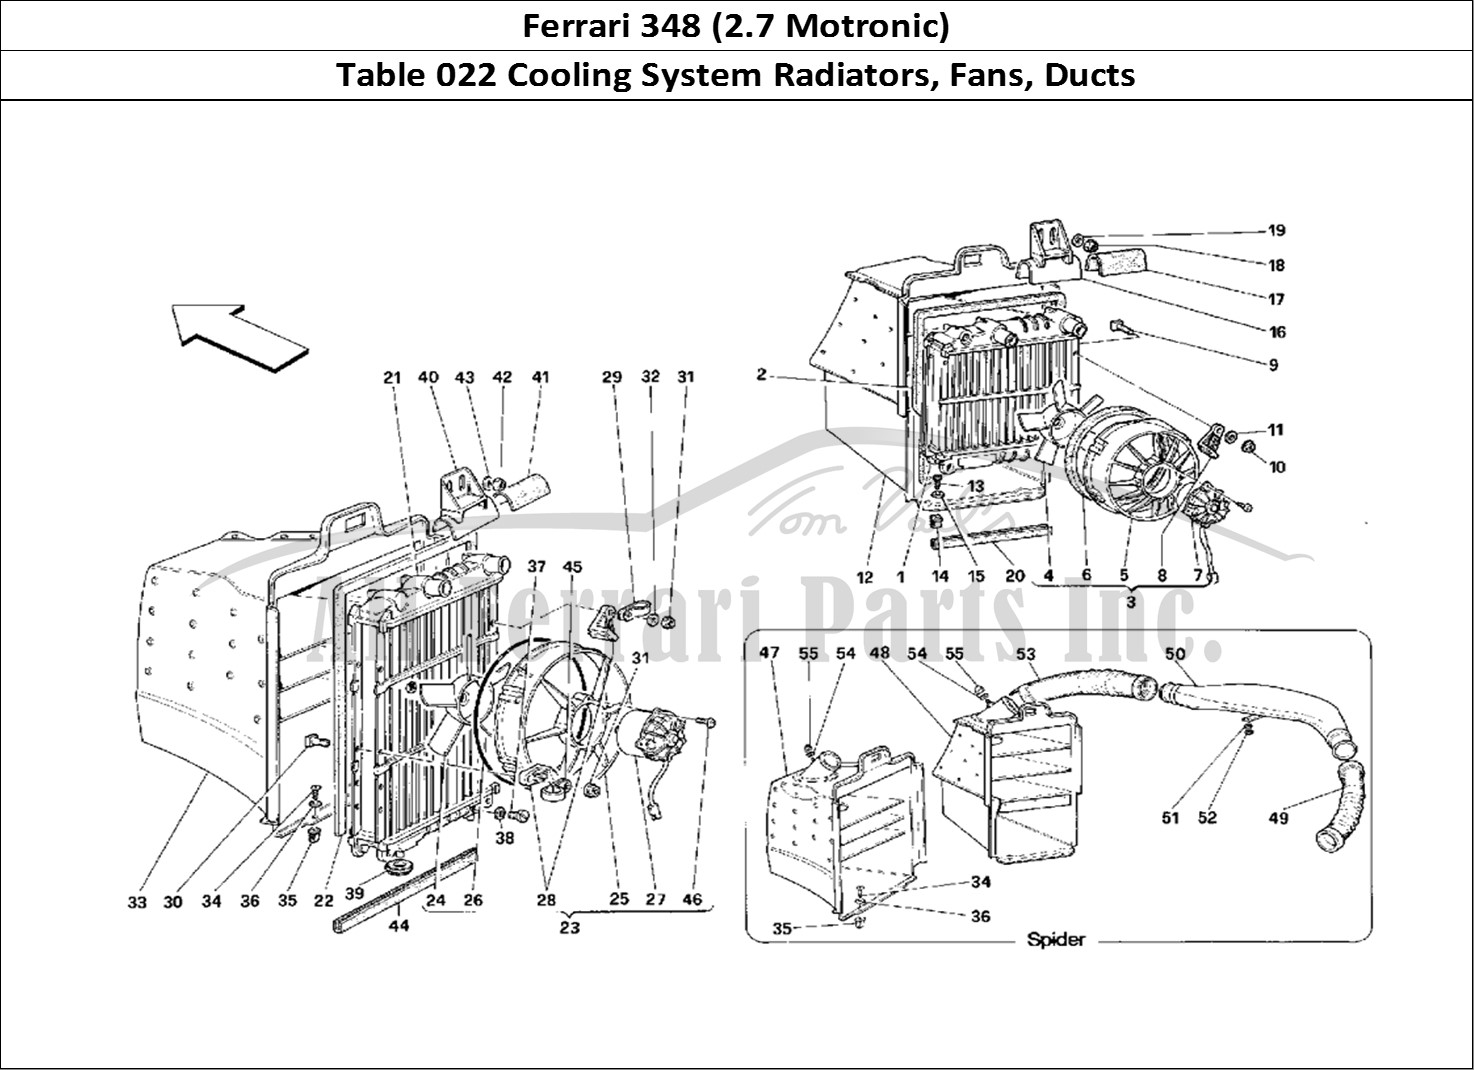 Ferrari Parts Ferrari 348 (2.7 Motronic) Page 022 Cooling System Radiators